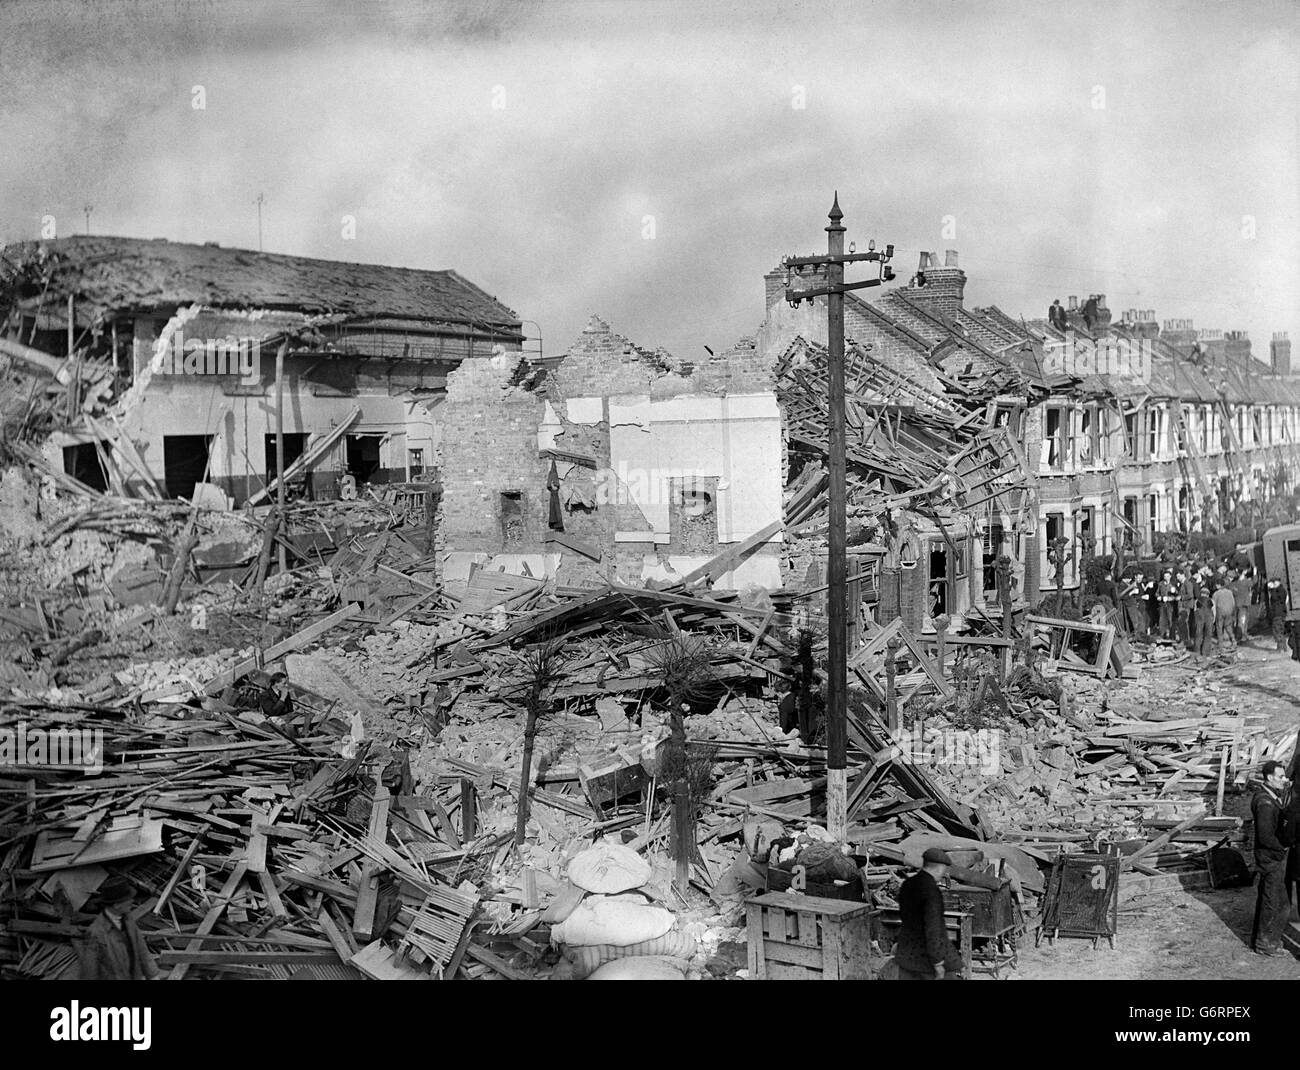 World War Two - The Blitz - German Bombing Raids Destroys Homes - London - 1940 Stock Photo